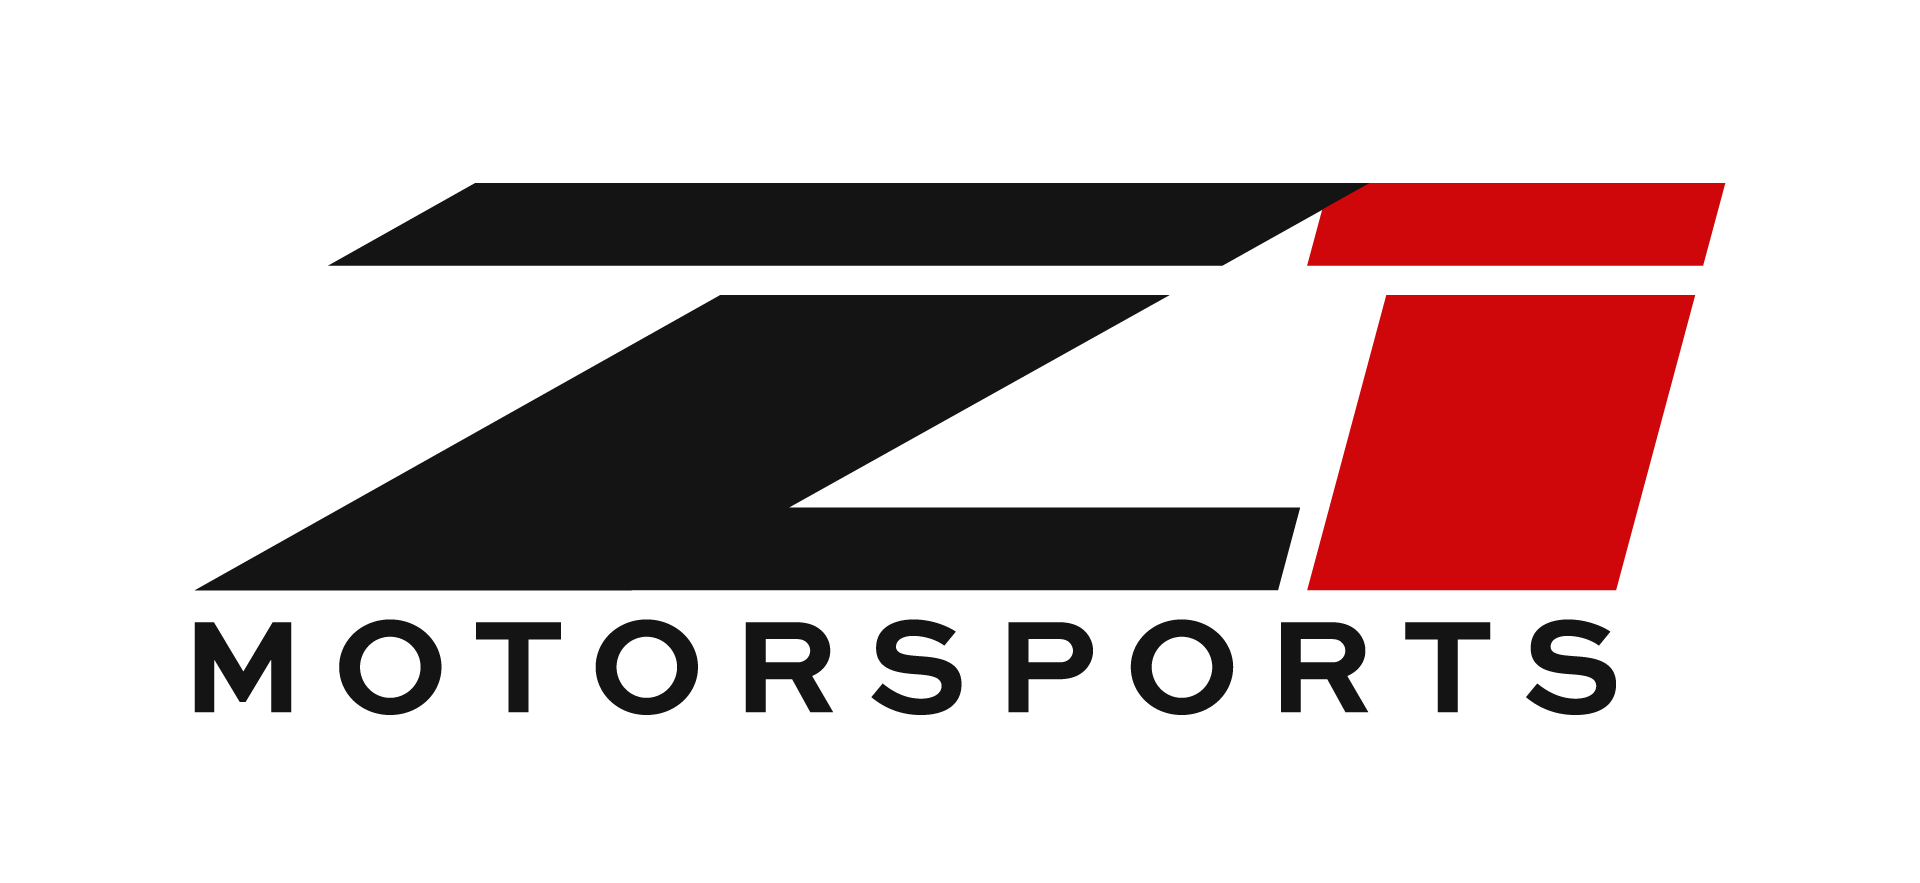 Visit Z1 Motorsports